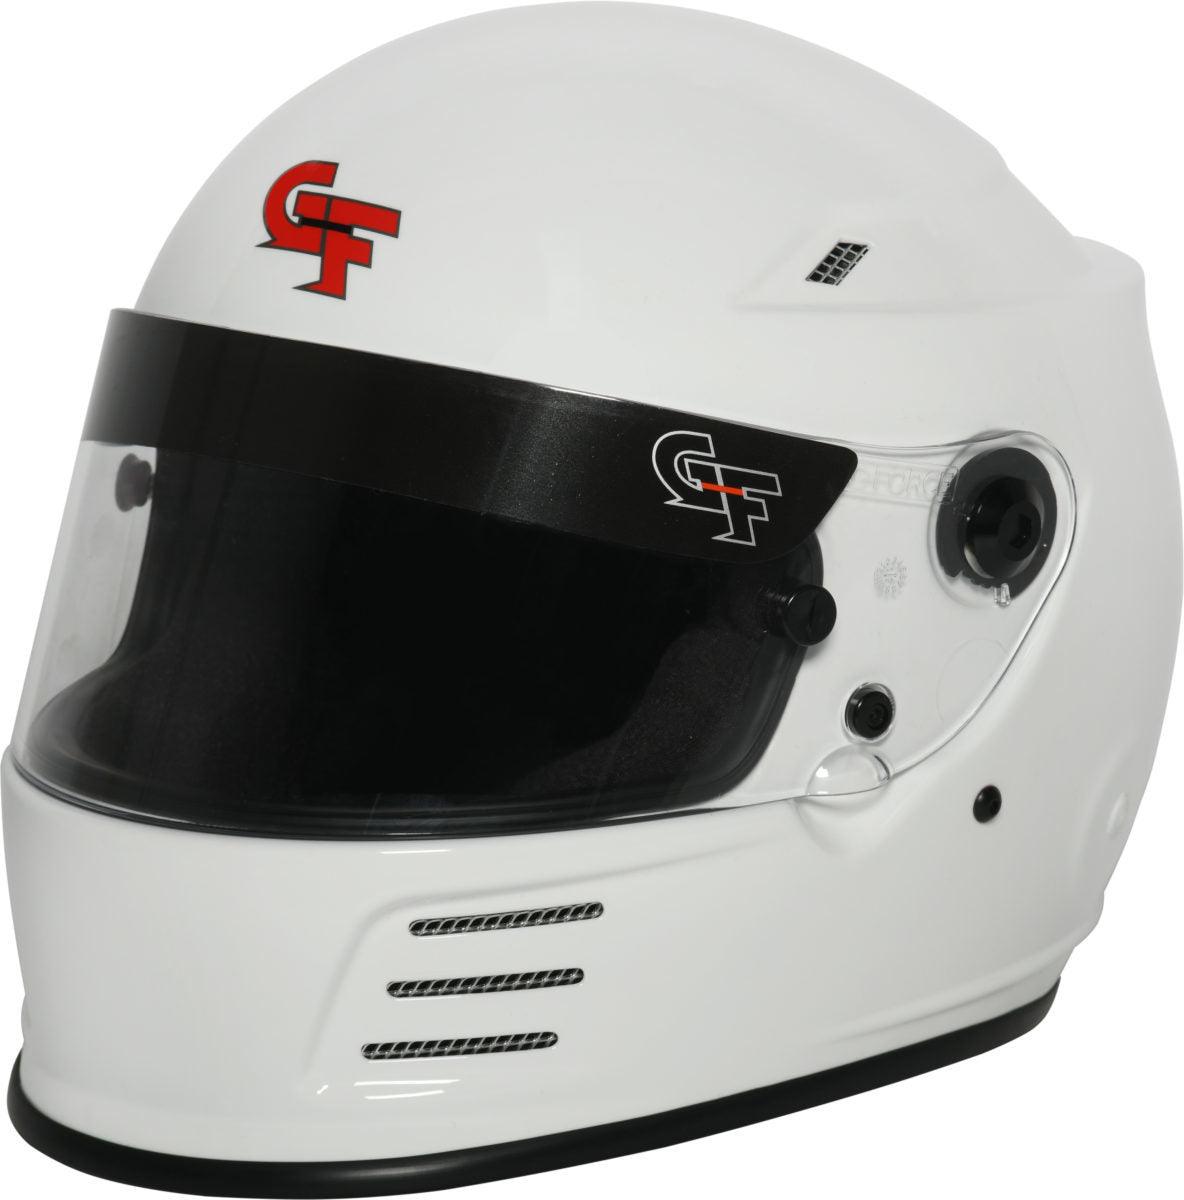 Helmet Revo Full Face X-Small White SA2015 - Burlile Performance Products